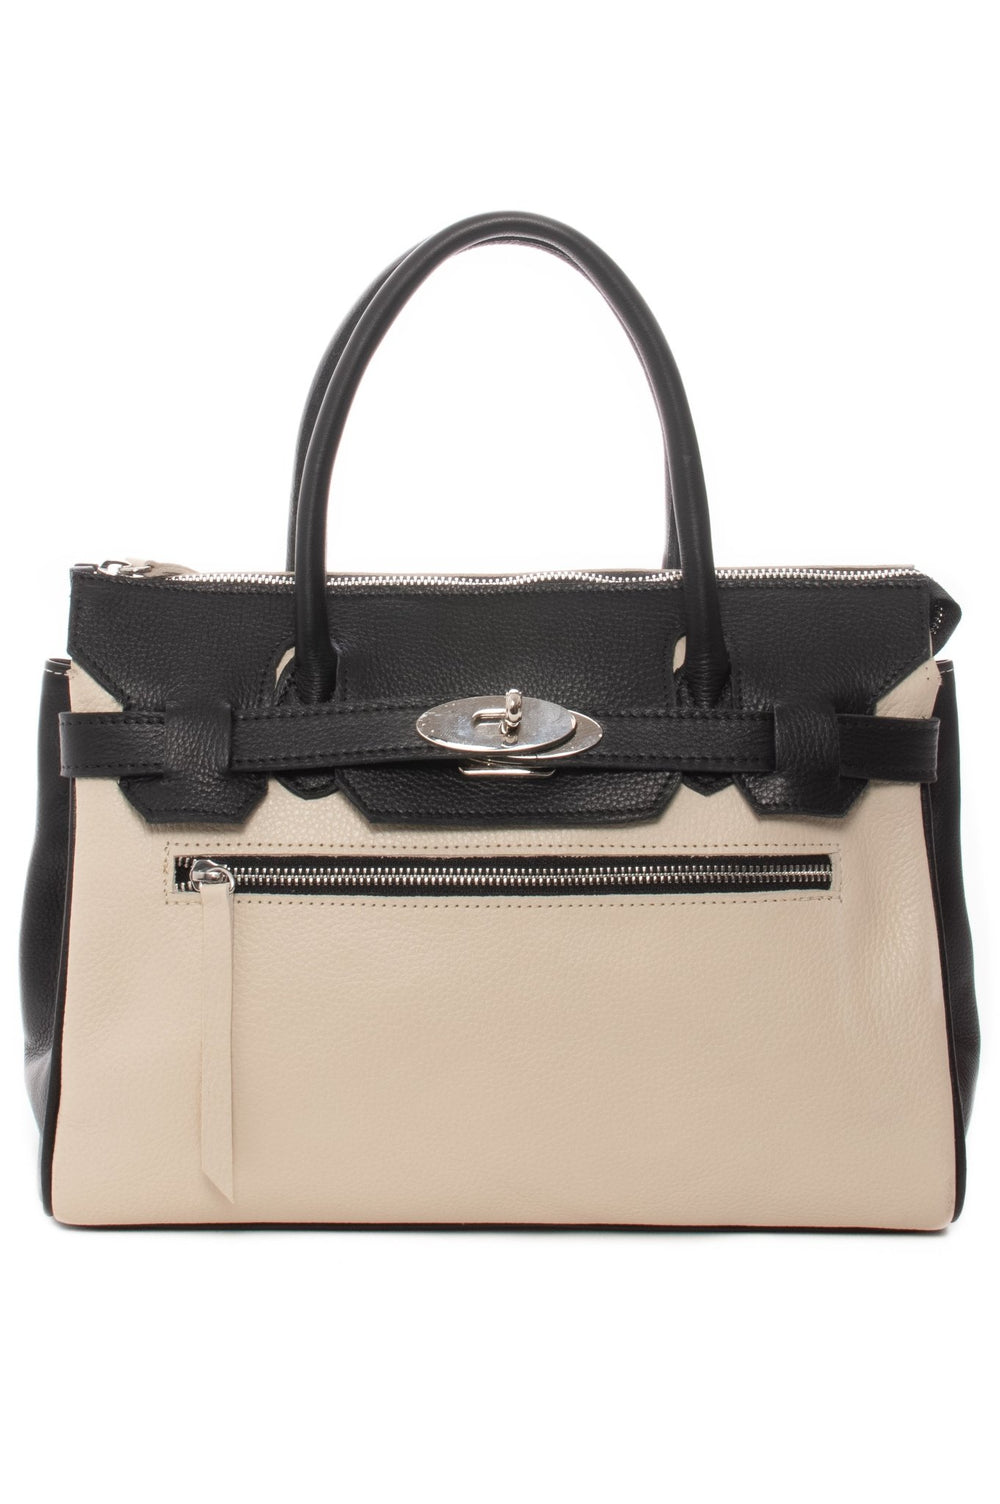 NADINE Off White and Black - Carla Mancini Handbags